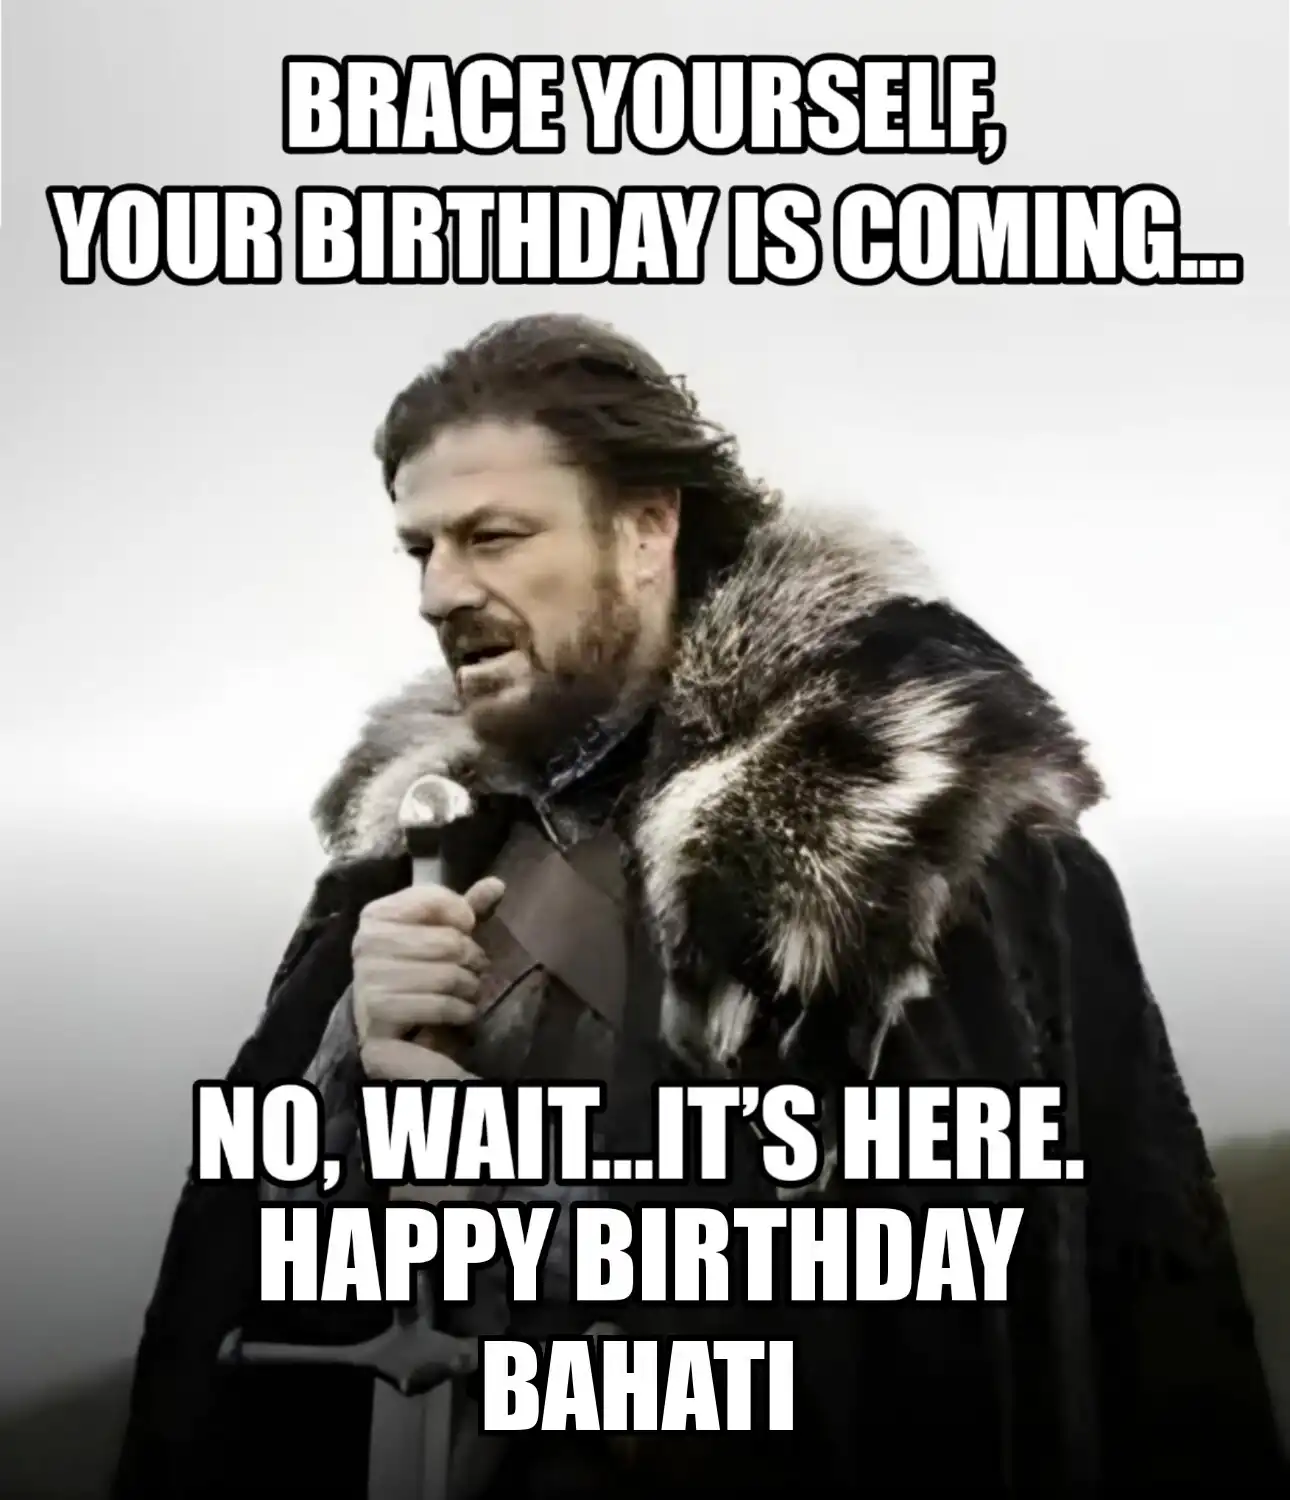 Happy Birthday Bahati Brace Yourself Your Birthday Is Coming Meme